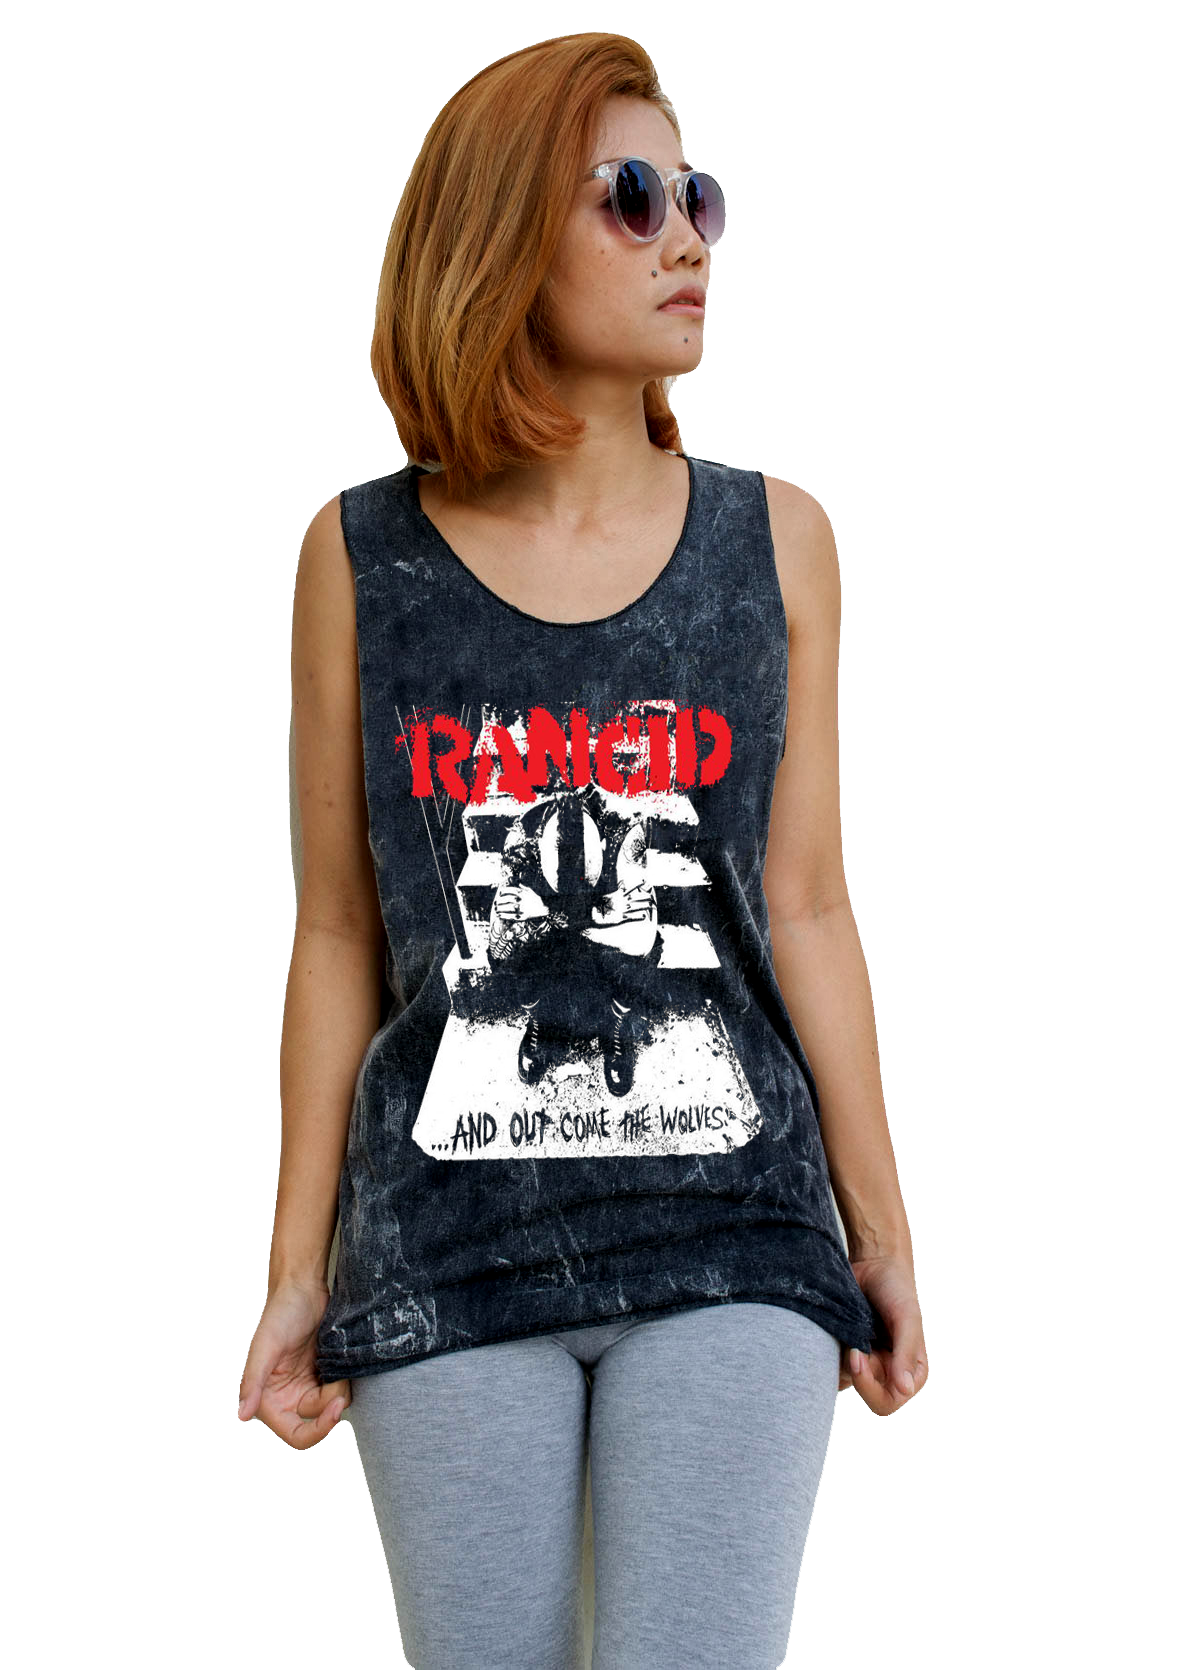 Unisex Rancid Tank-Top Singlet vest Sleeveless T-shirt